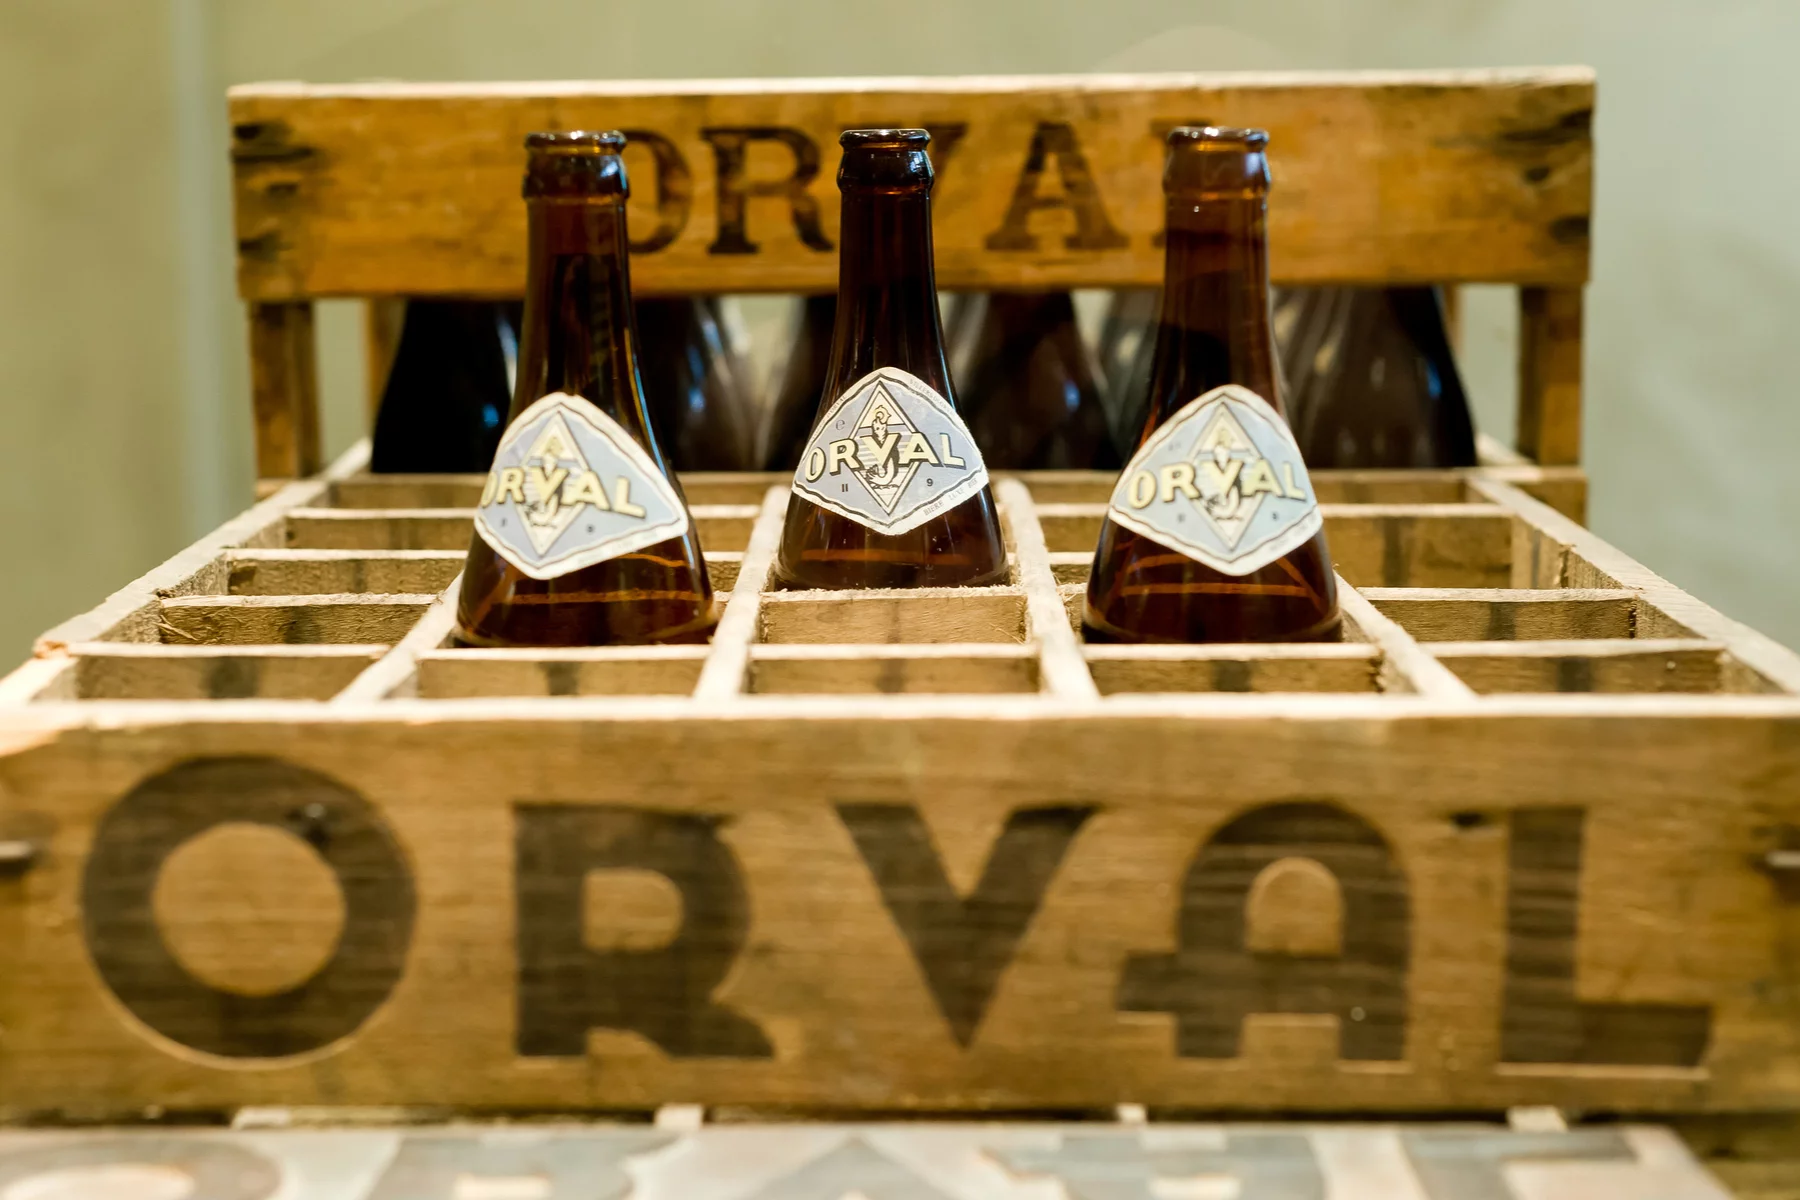 Orval trappist beer bottles